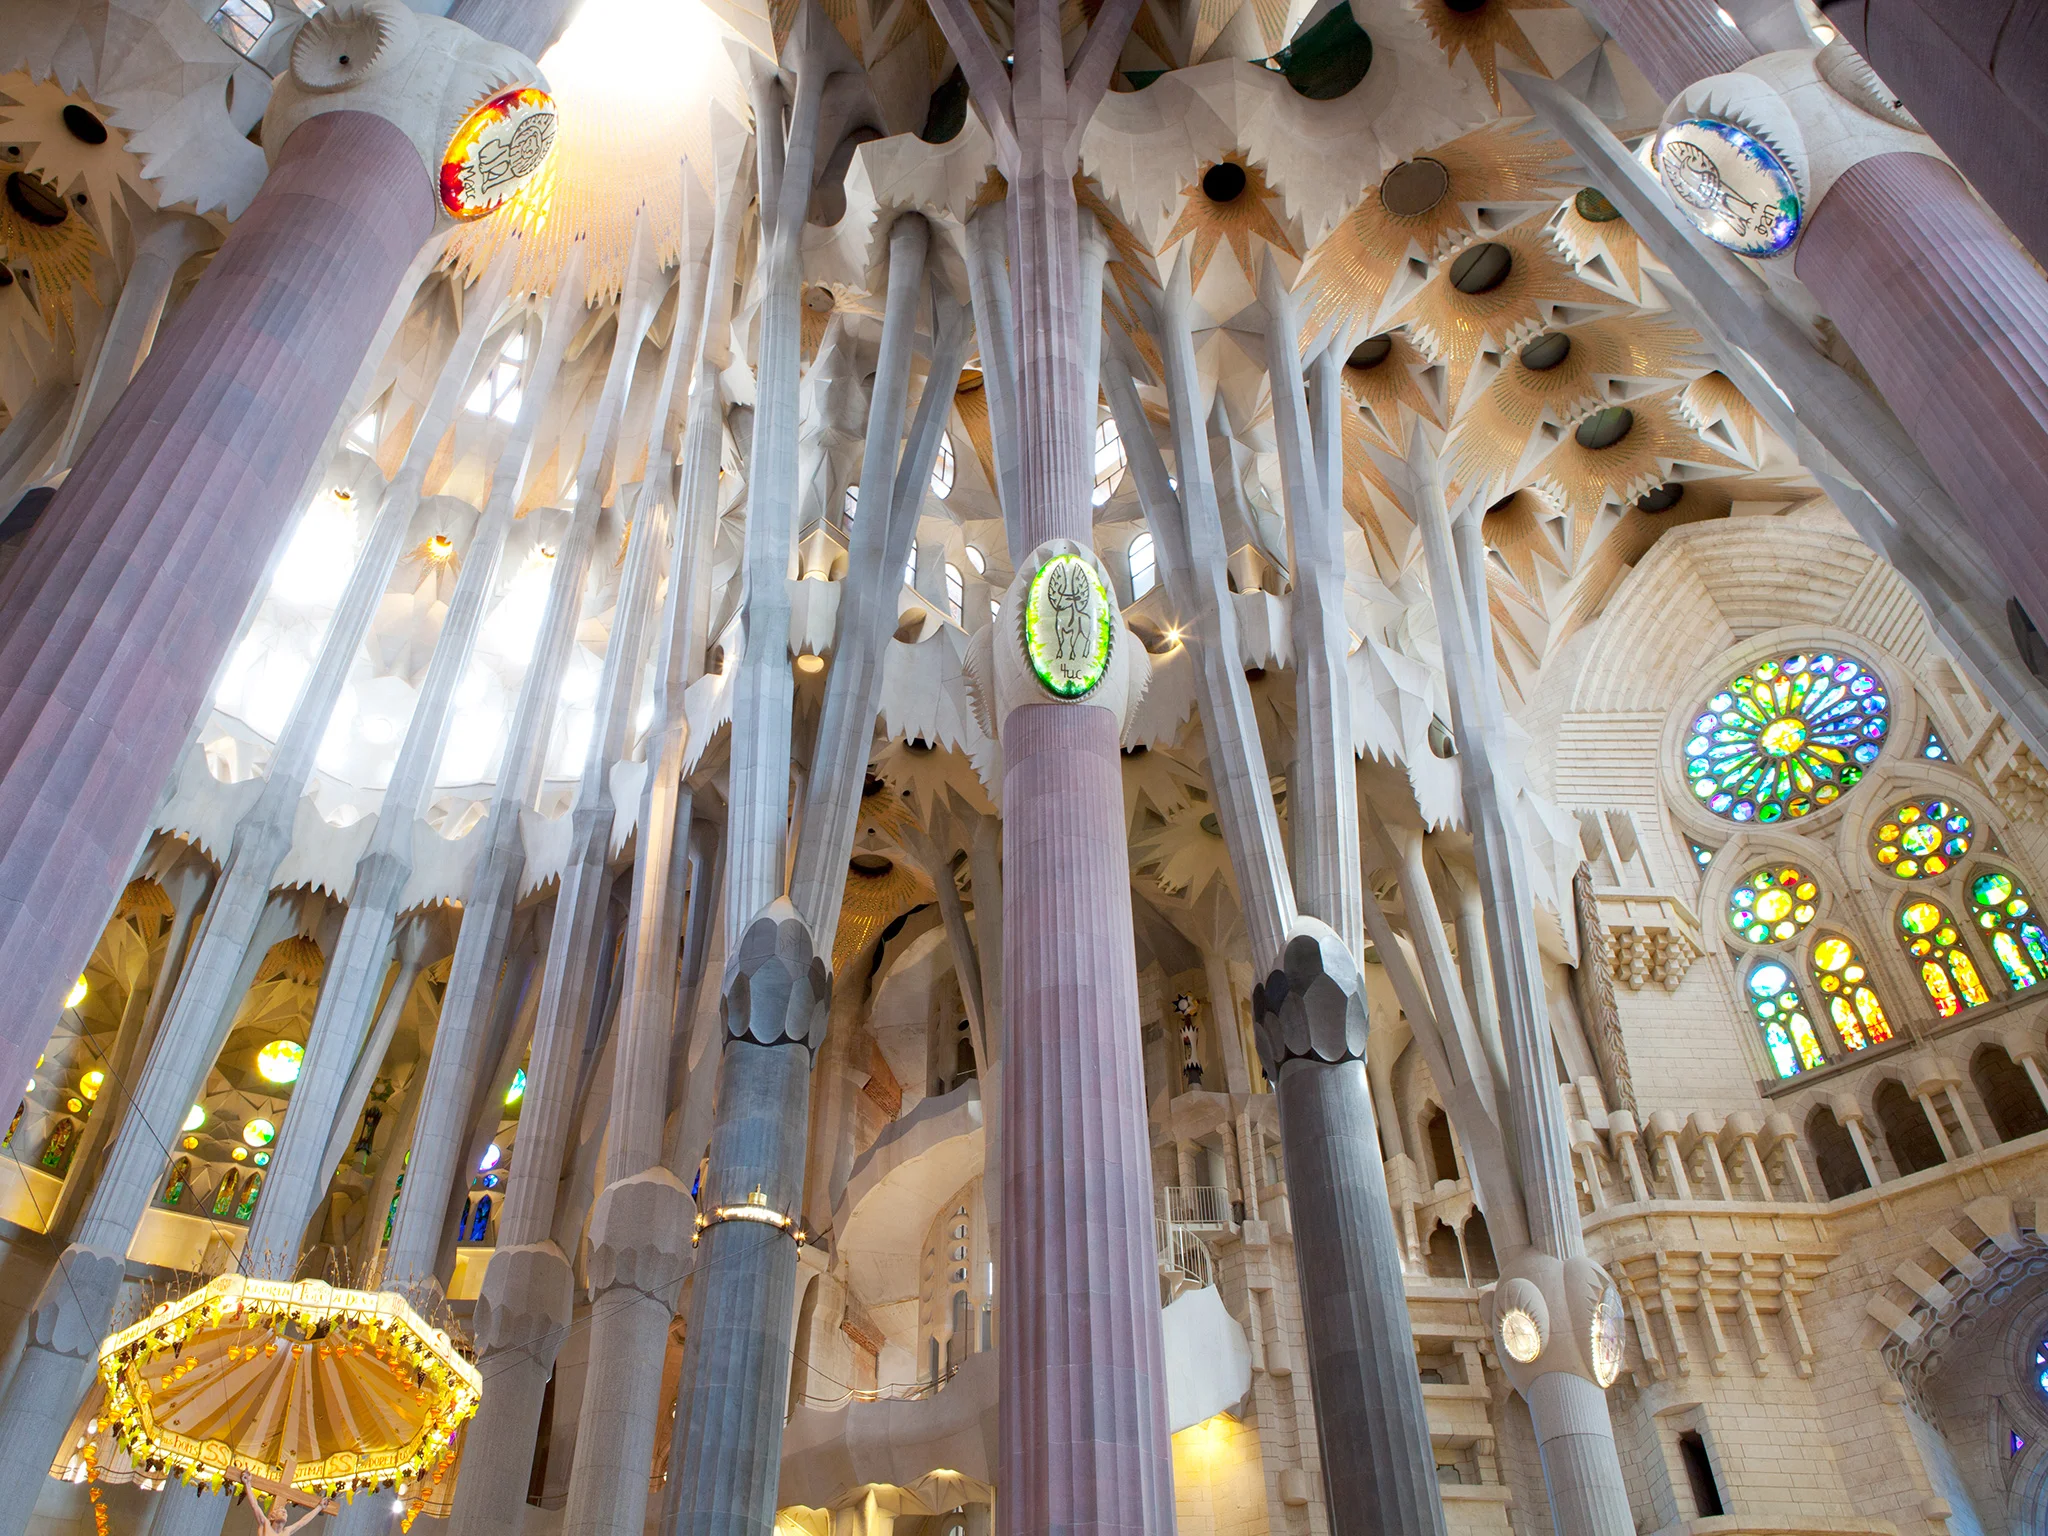 Sagrada Familia by Gaudi - Basilica in Barcelona, Spain - 137 Year Project 39